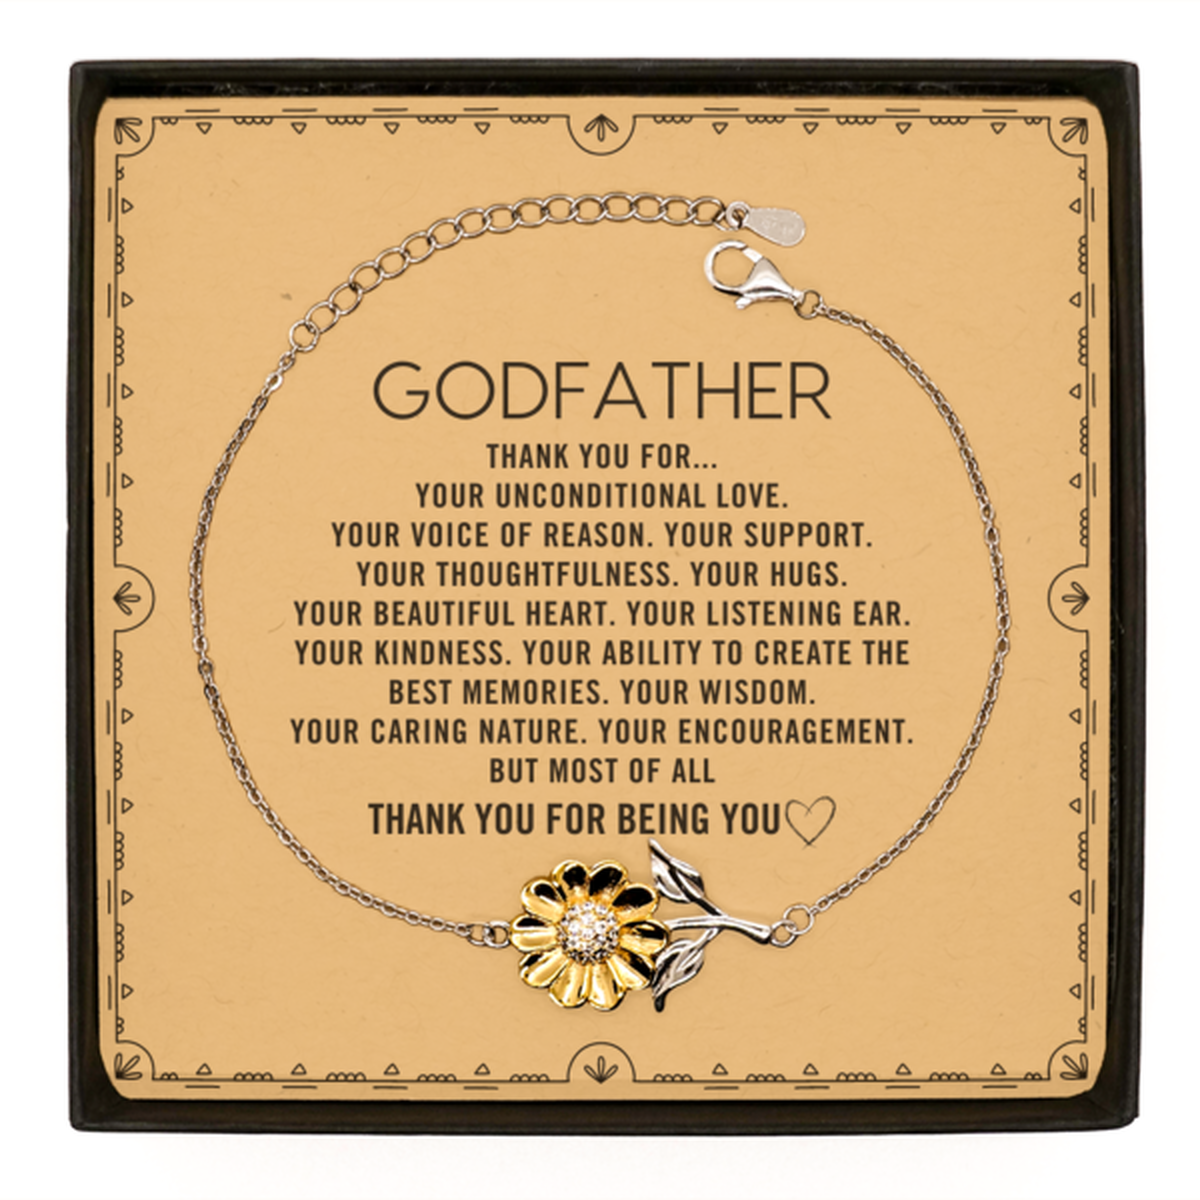 Godfather Sunflower Bracelet Custom, Message Card Gifts For Godfather Christmas Graduation Birthday Gifts for Men Women Godfather Thank you for Your unconditional love